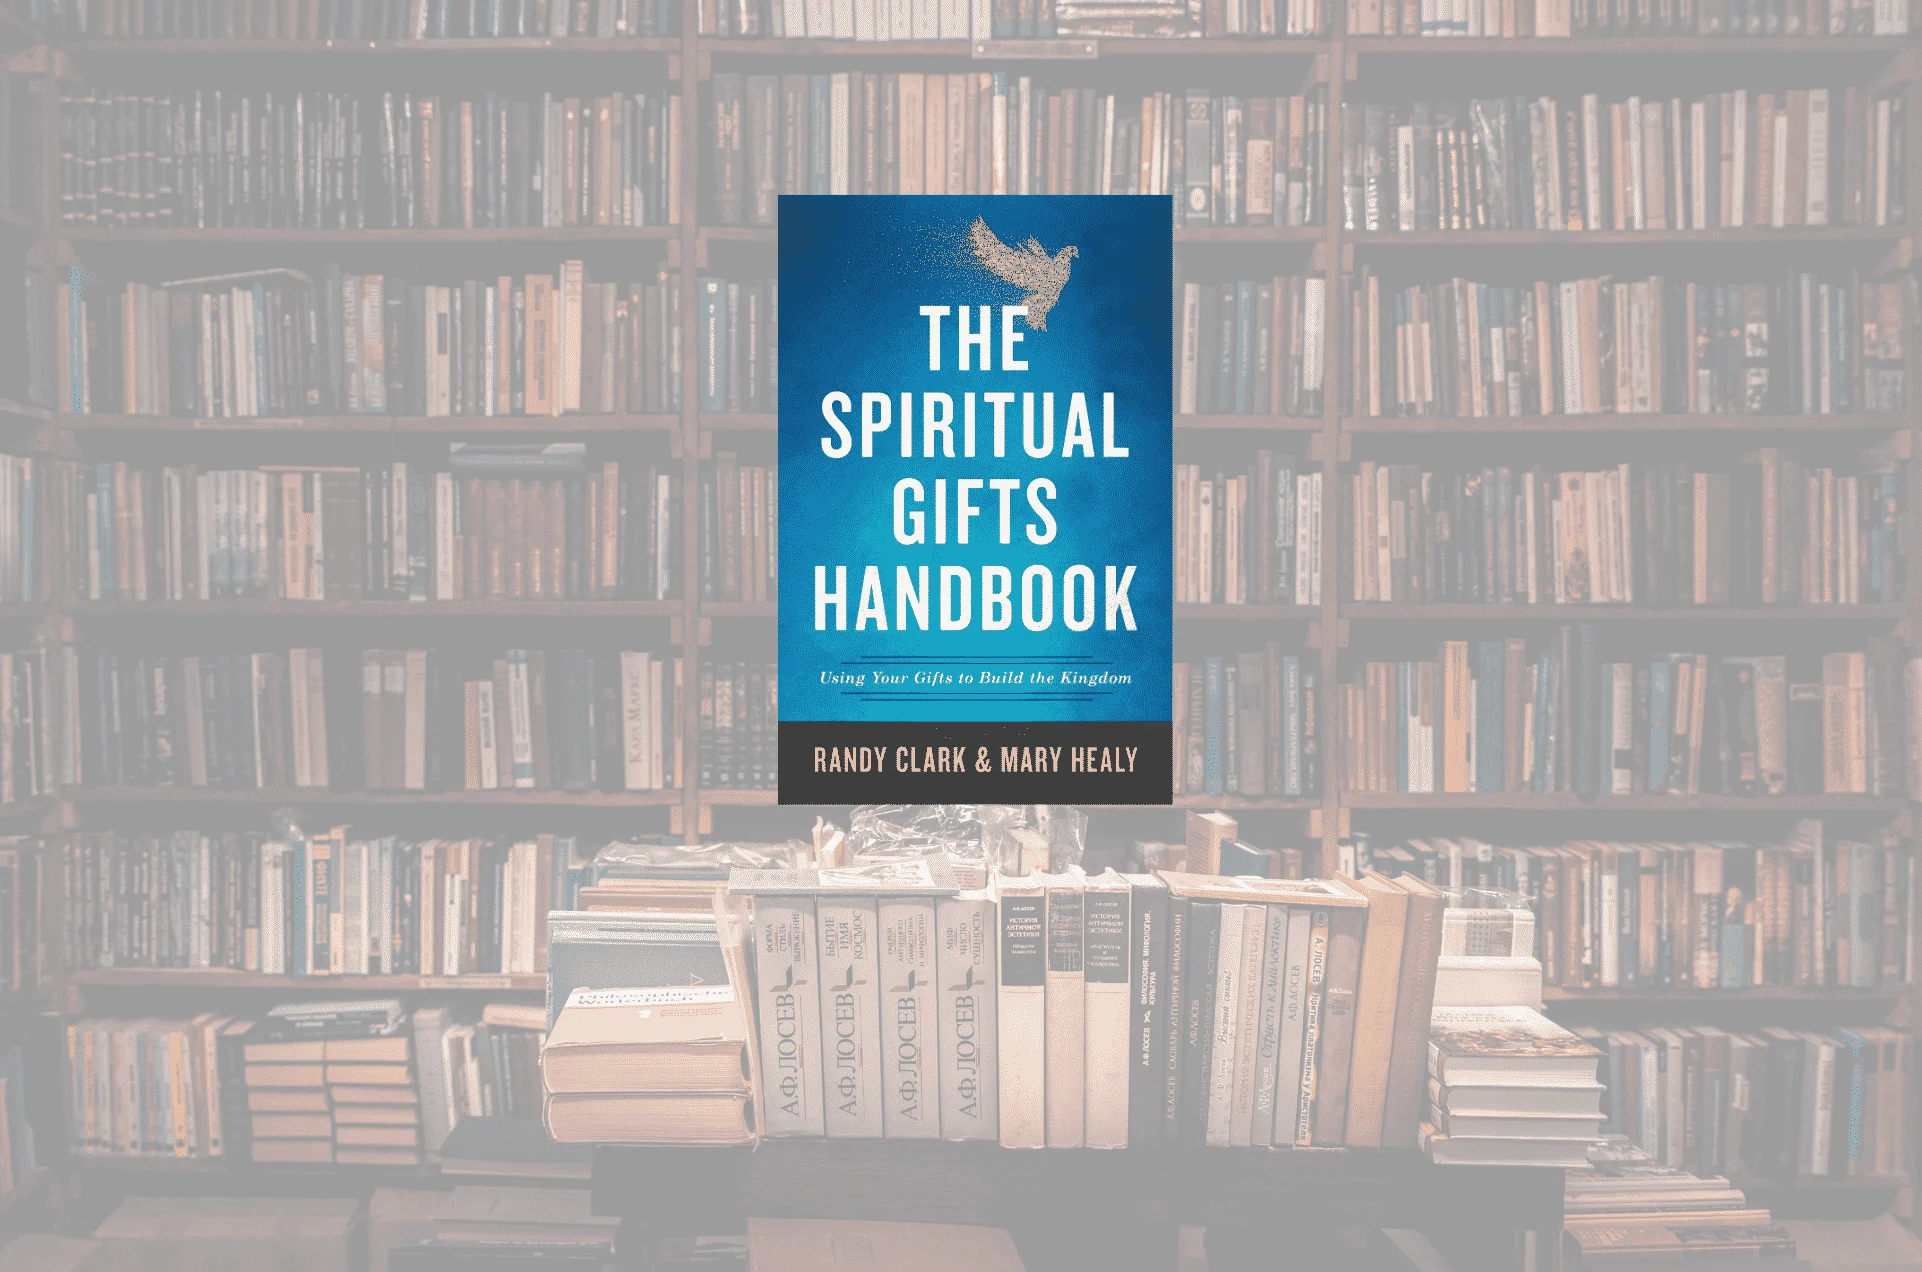 THE SPIRITUAL GIFTS OF HANDBOOK